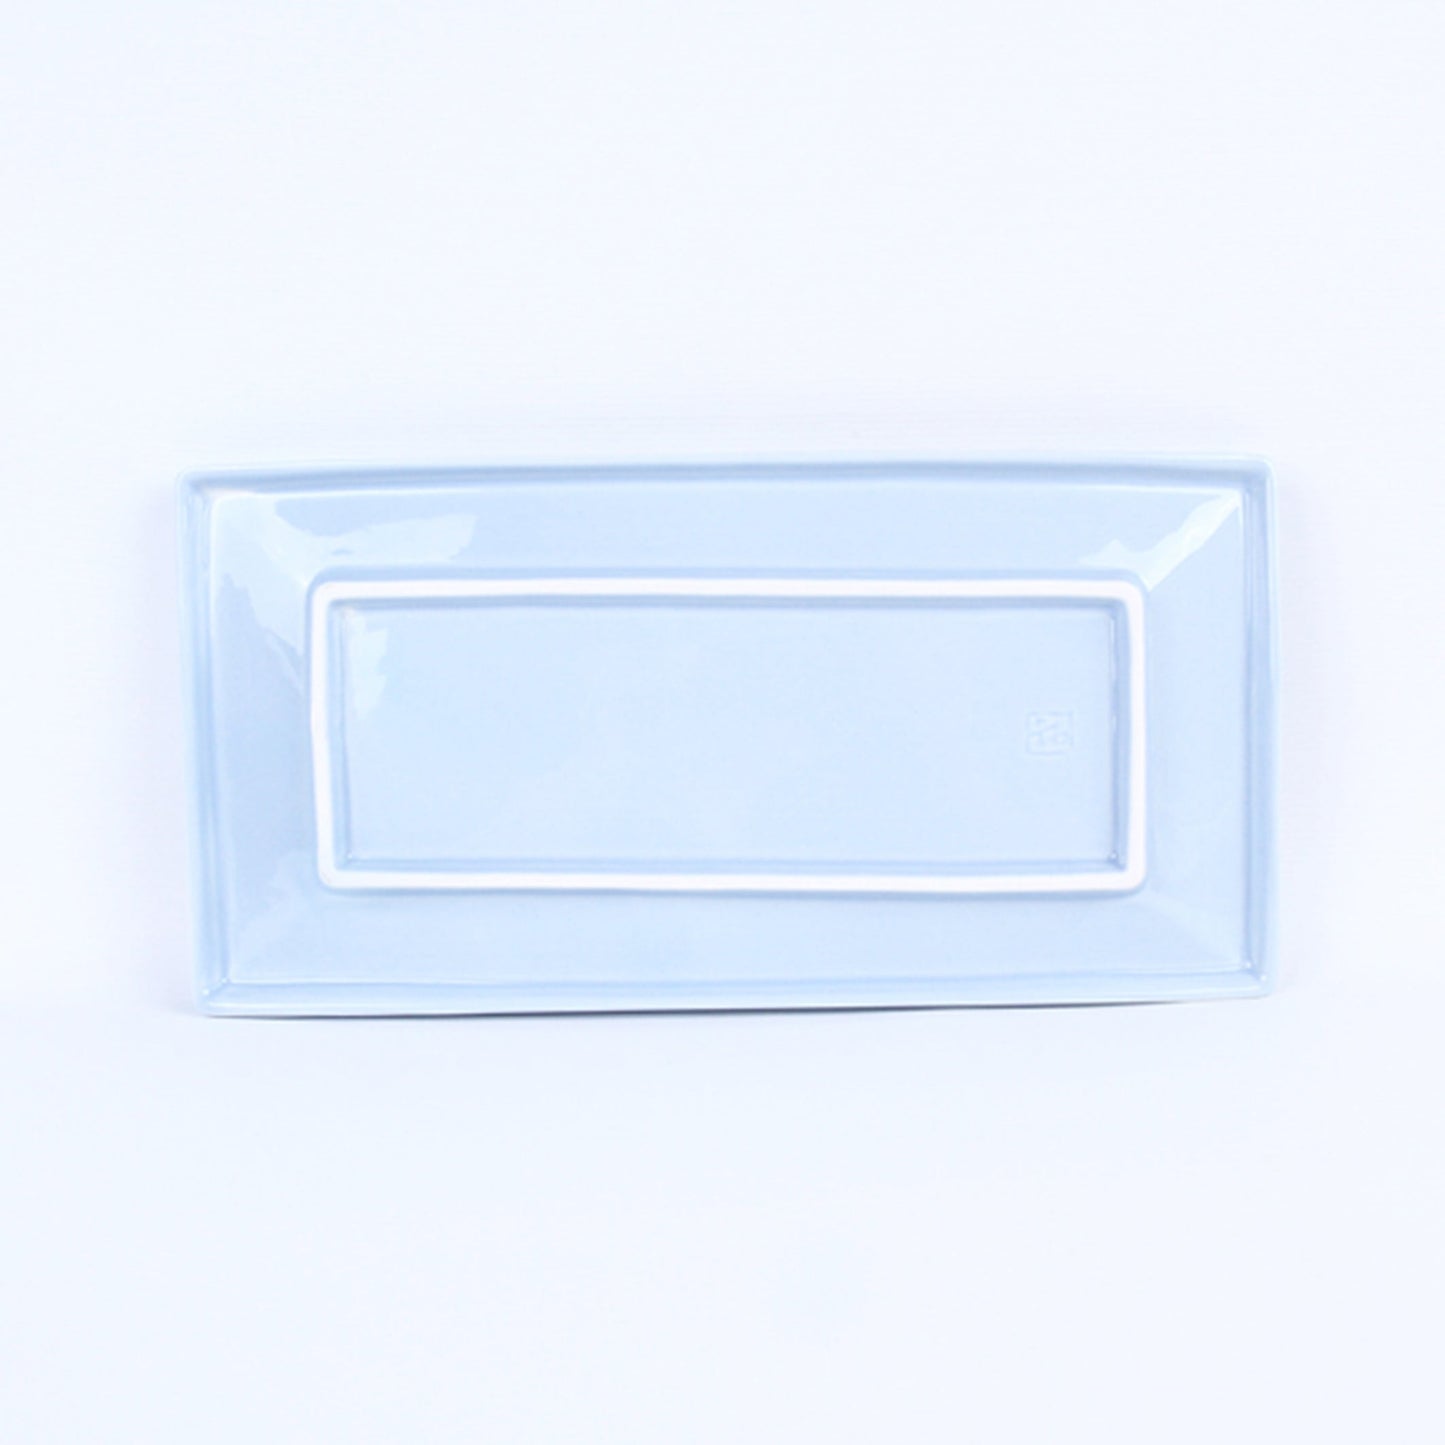 Refreshing Rectangular Plate 300mm (Sky Blue Color)𝟭 𝗣𝗹𝘂𝘀 𝟭